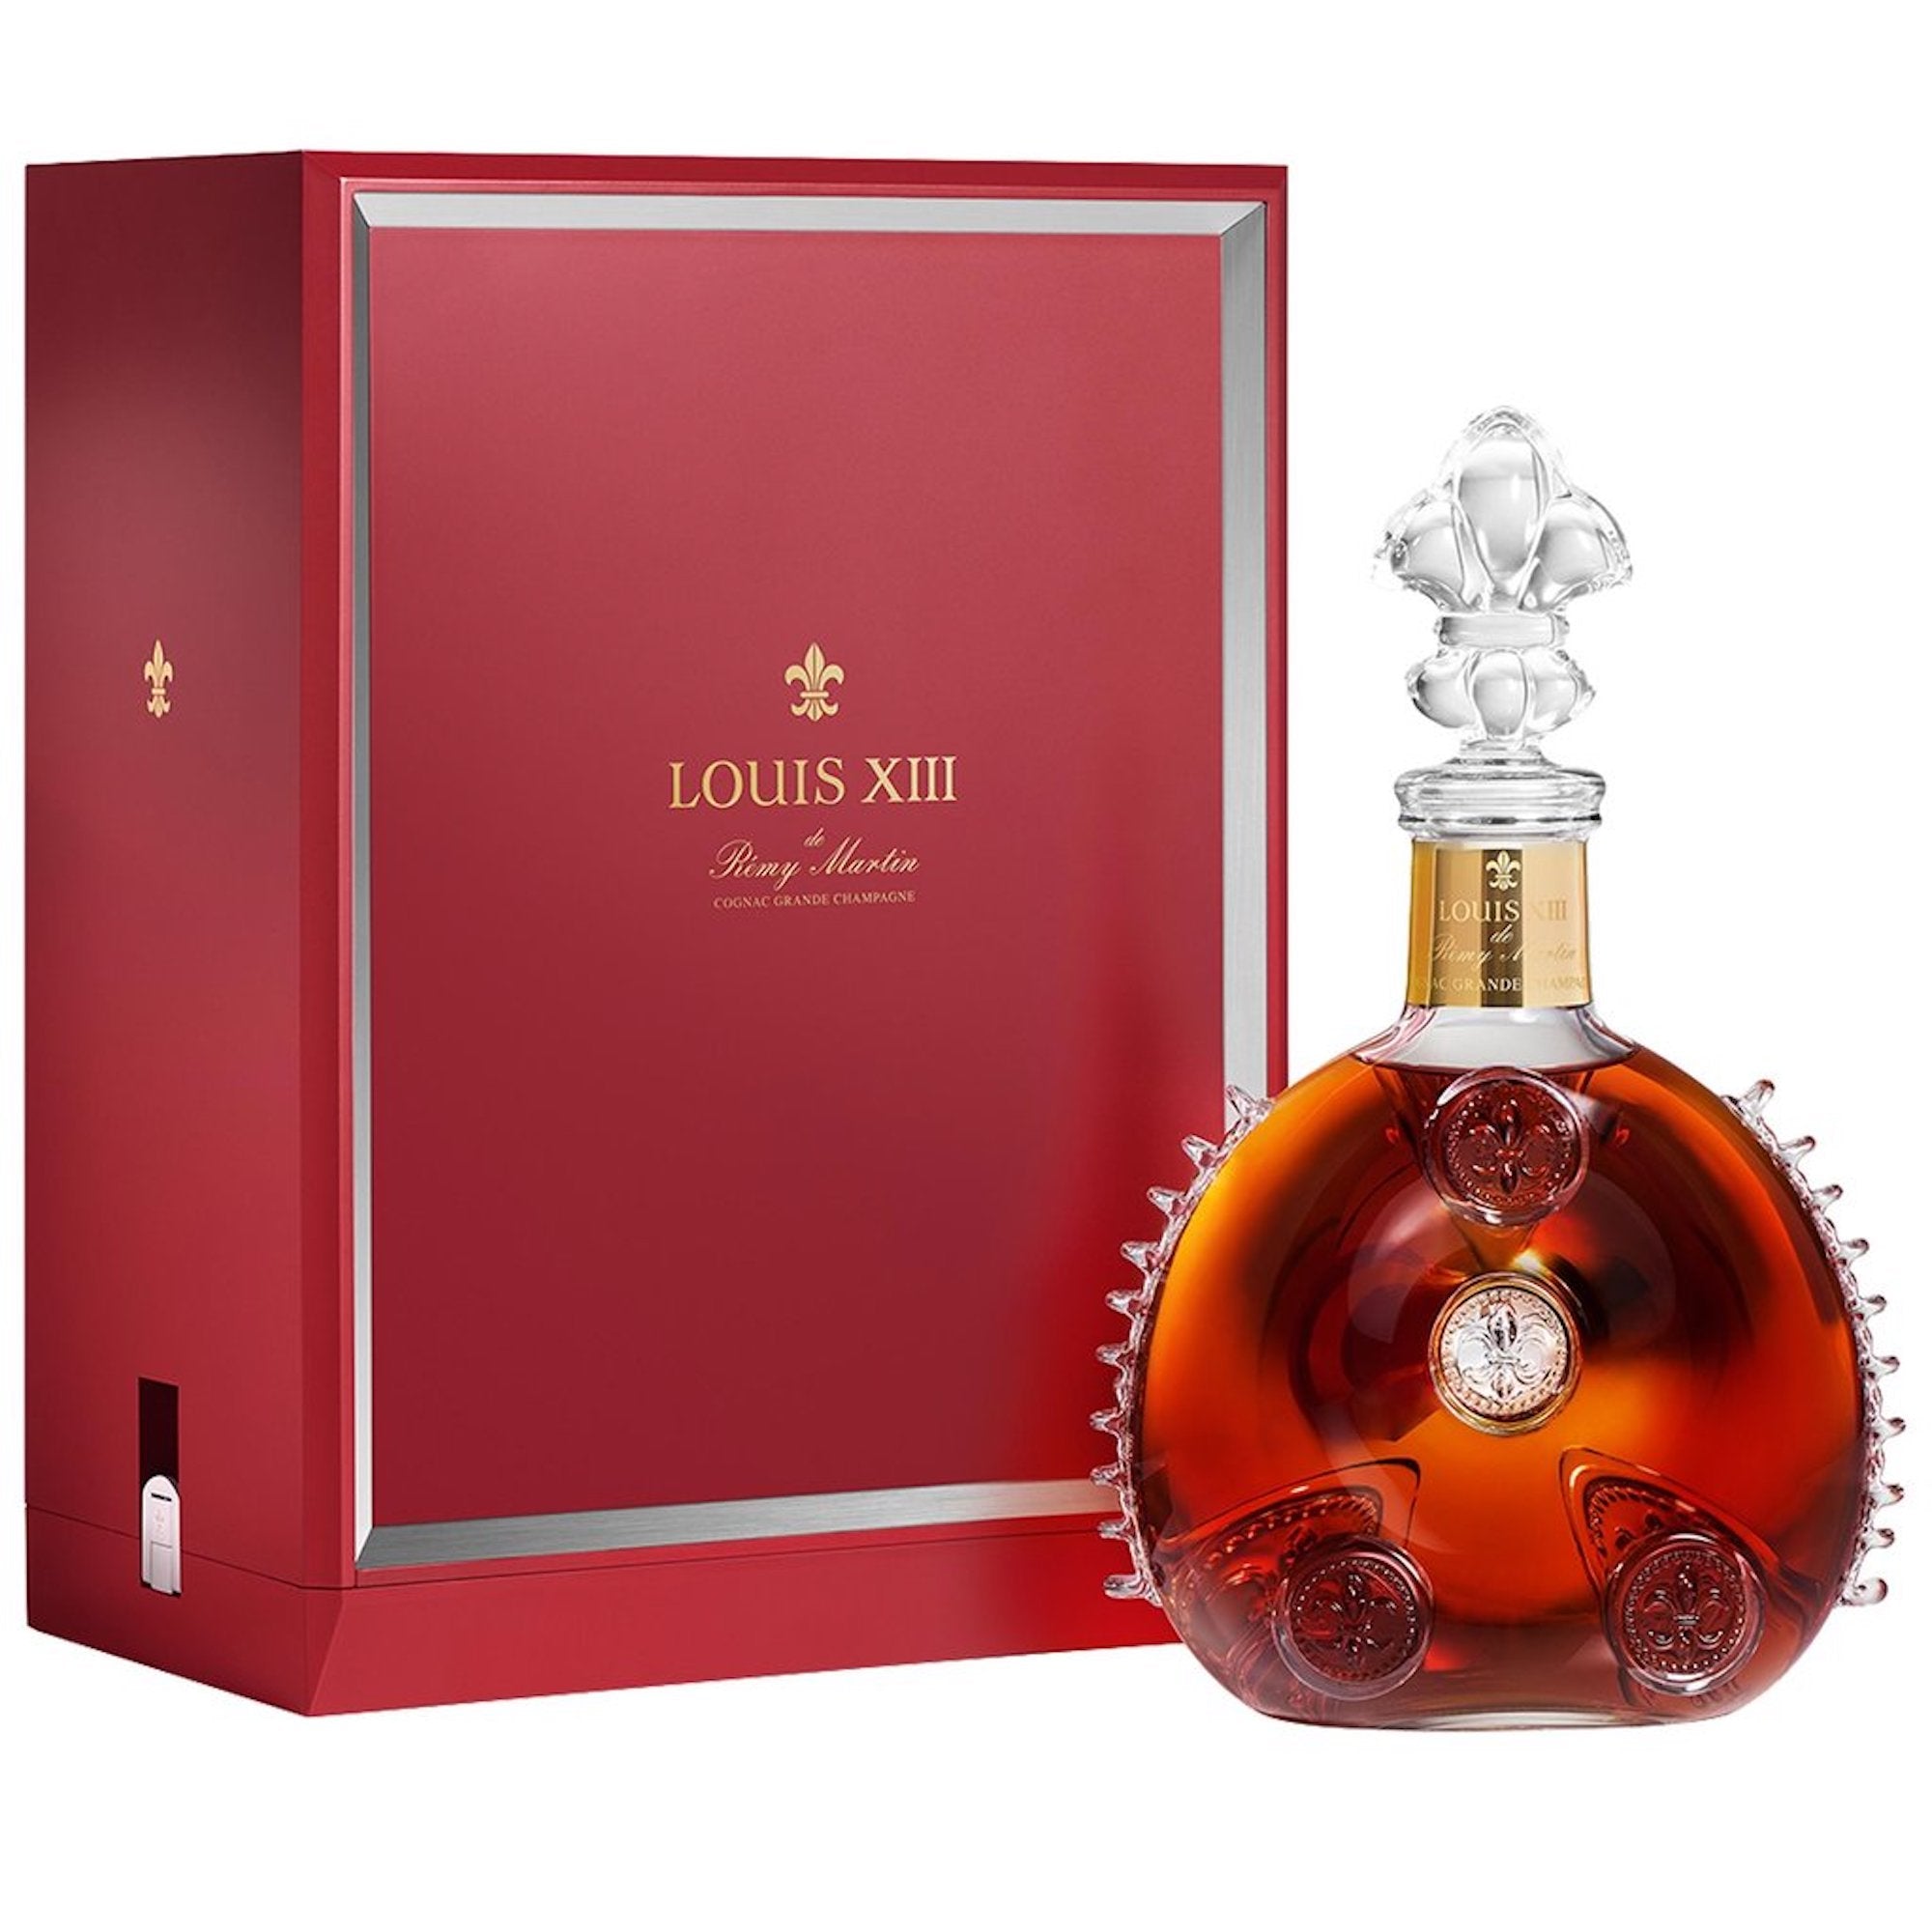 Remy Martin Louis XIII 1.75L - Vicker's Liquors